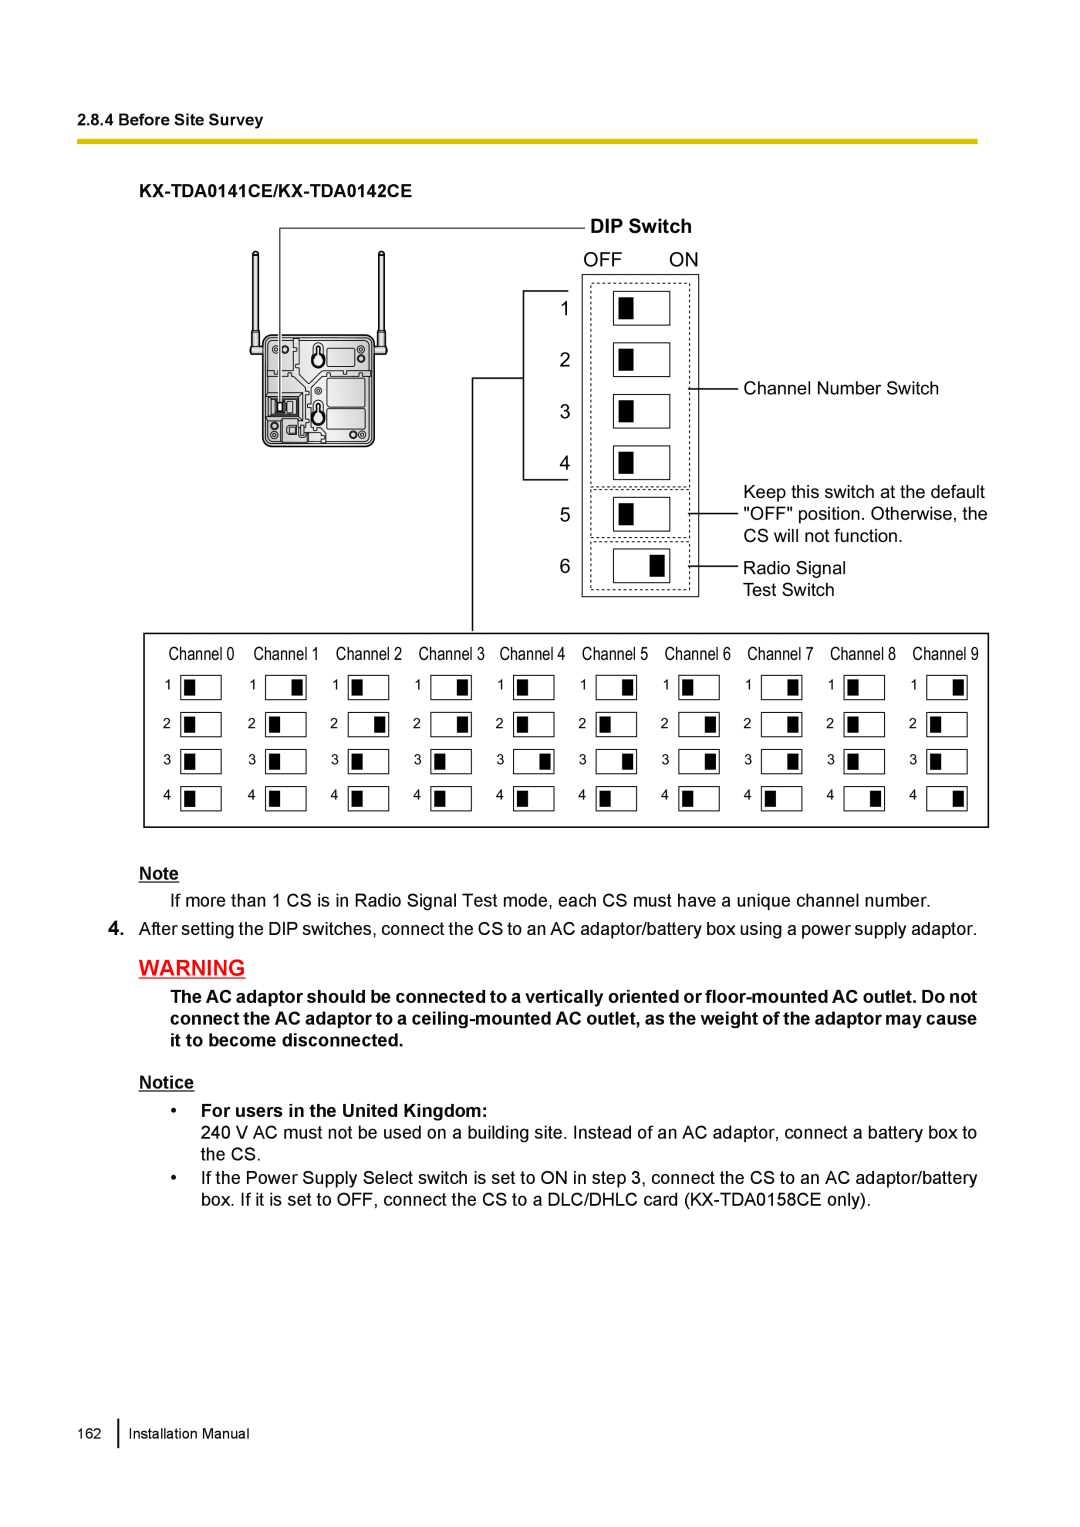 Panasonic KX-TDA100 installation manual DIP Switch, Off On, KX-TDA0141CE/KX-TDA0142CE, For users in the United Kingdom 